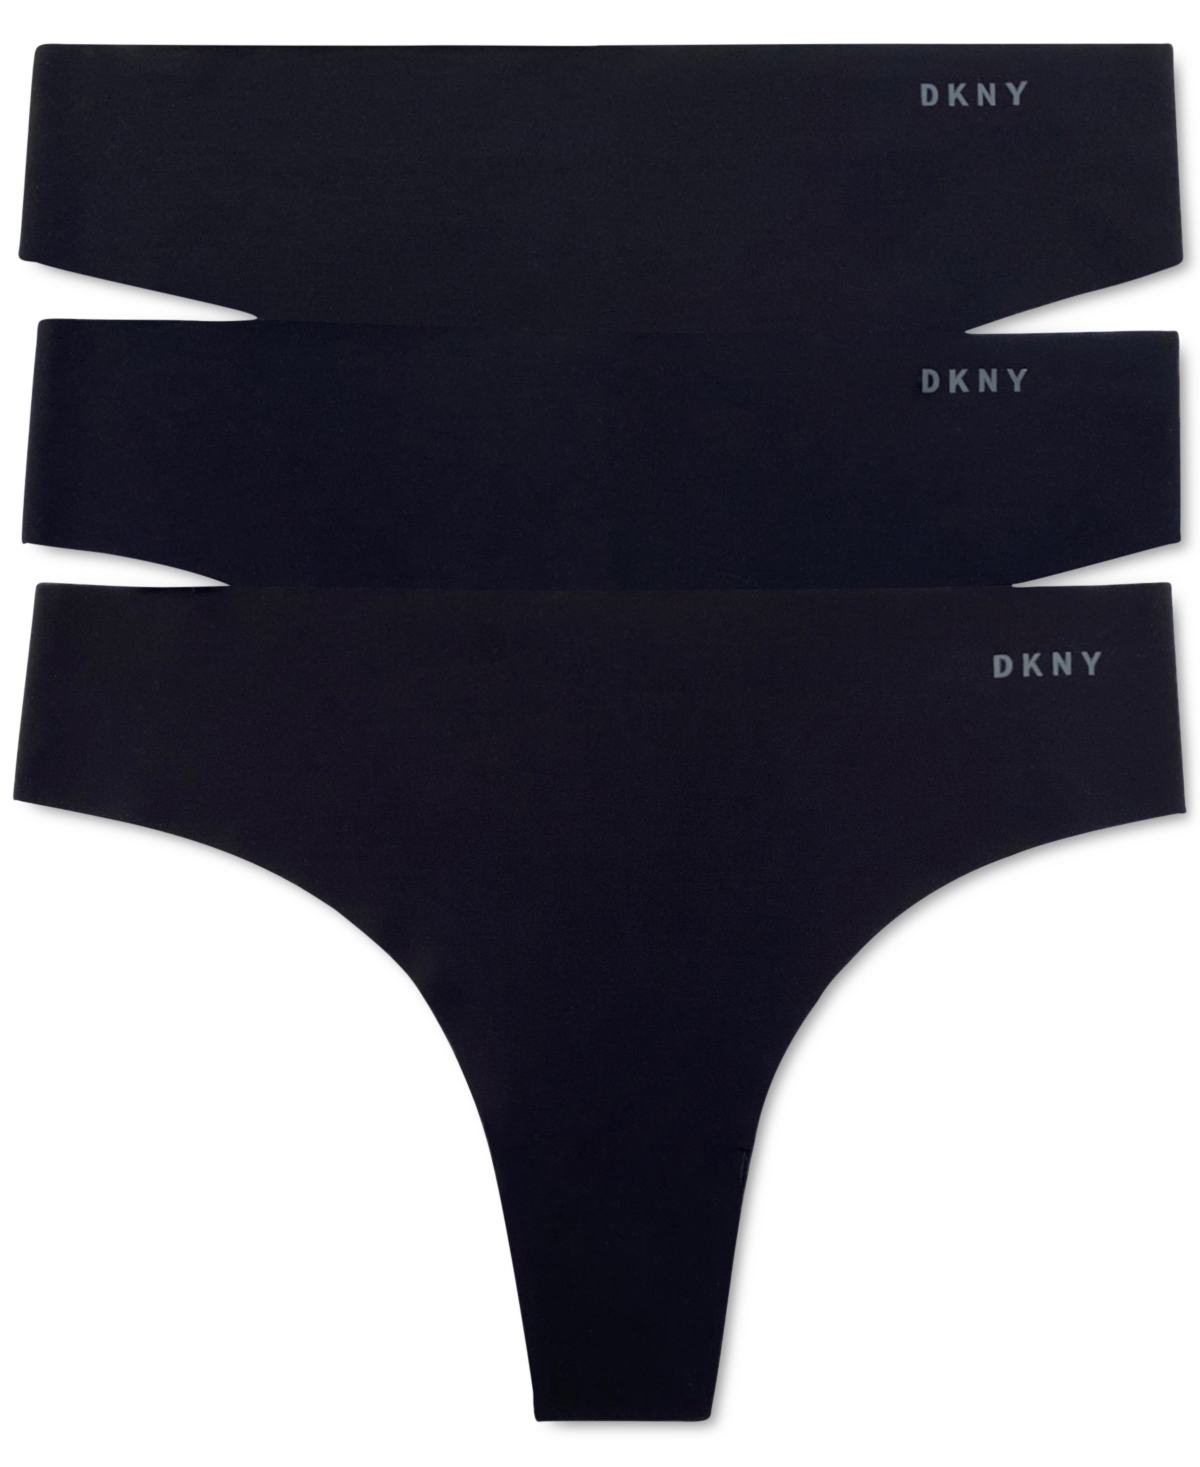 DKNY Assorted 3-Pack Monogram Mesh Thong